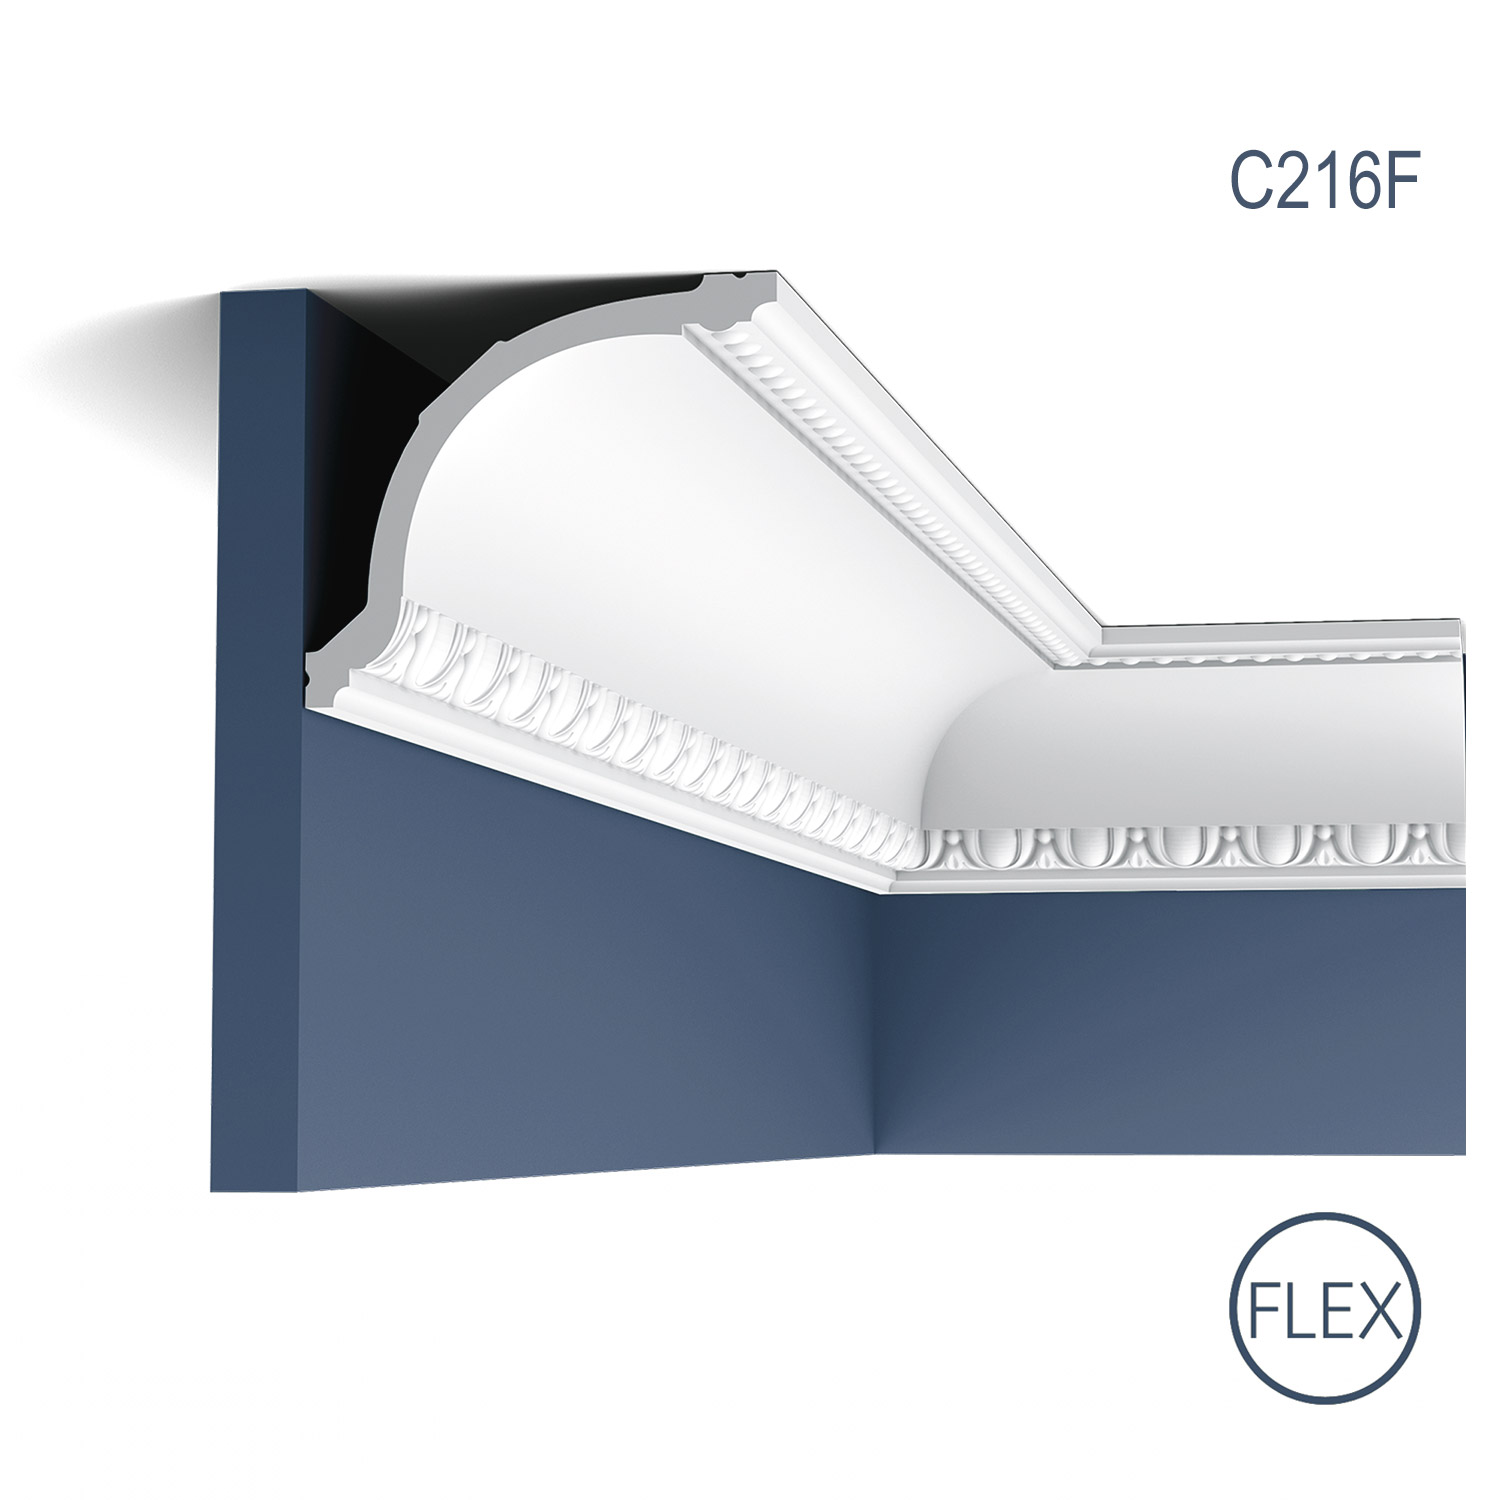 Cornisa Flex Luxxus C216F, Dimensiuni: 200 X 11.6 X 13.3 cm, Orac Decor Orac Decor